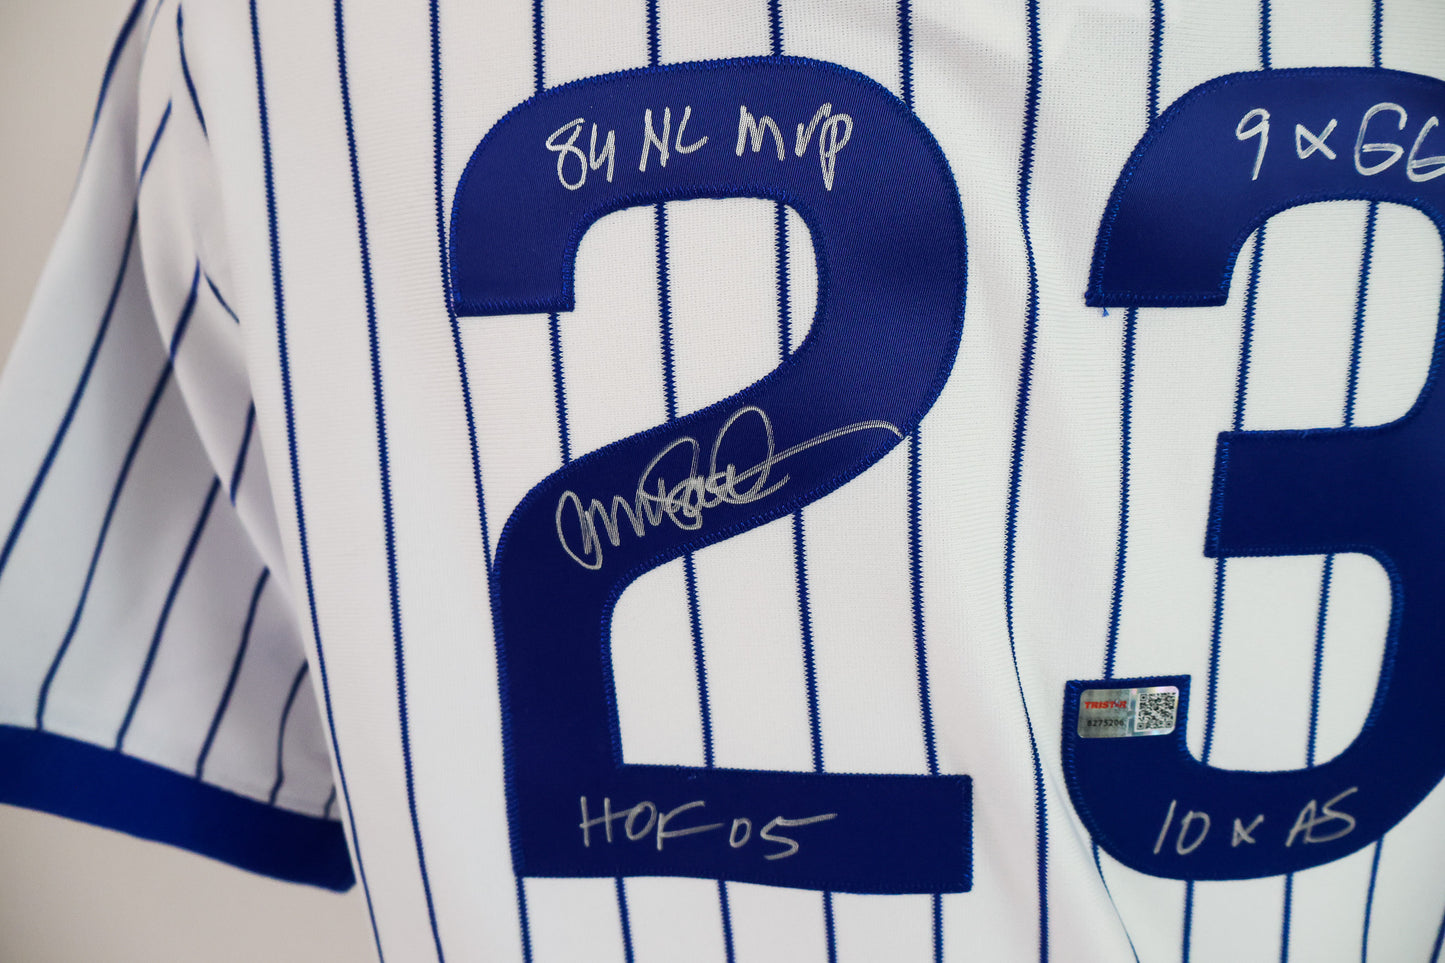 Ryne Sandberg Autographed Chicago Cubs Jersey With "8X NL MVP" "HOF 05" "9X GG" "10 X AS" Inscription